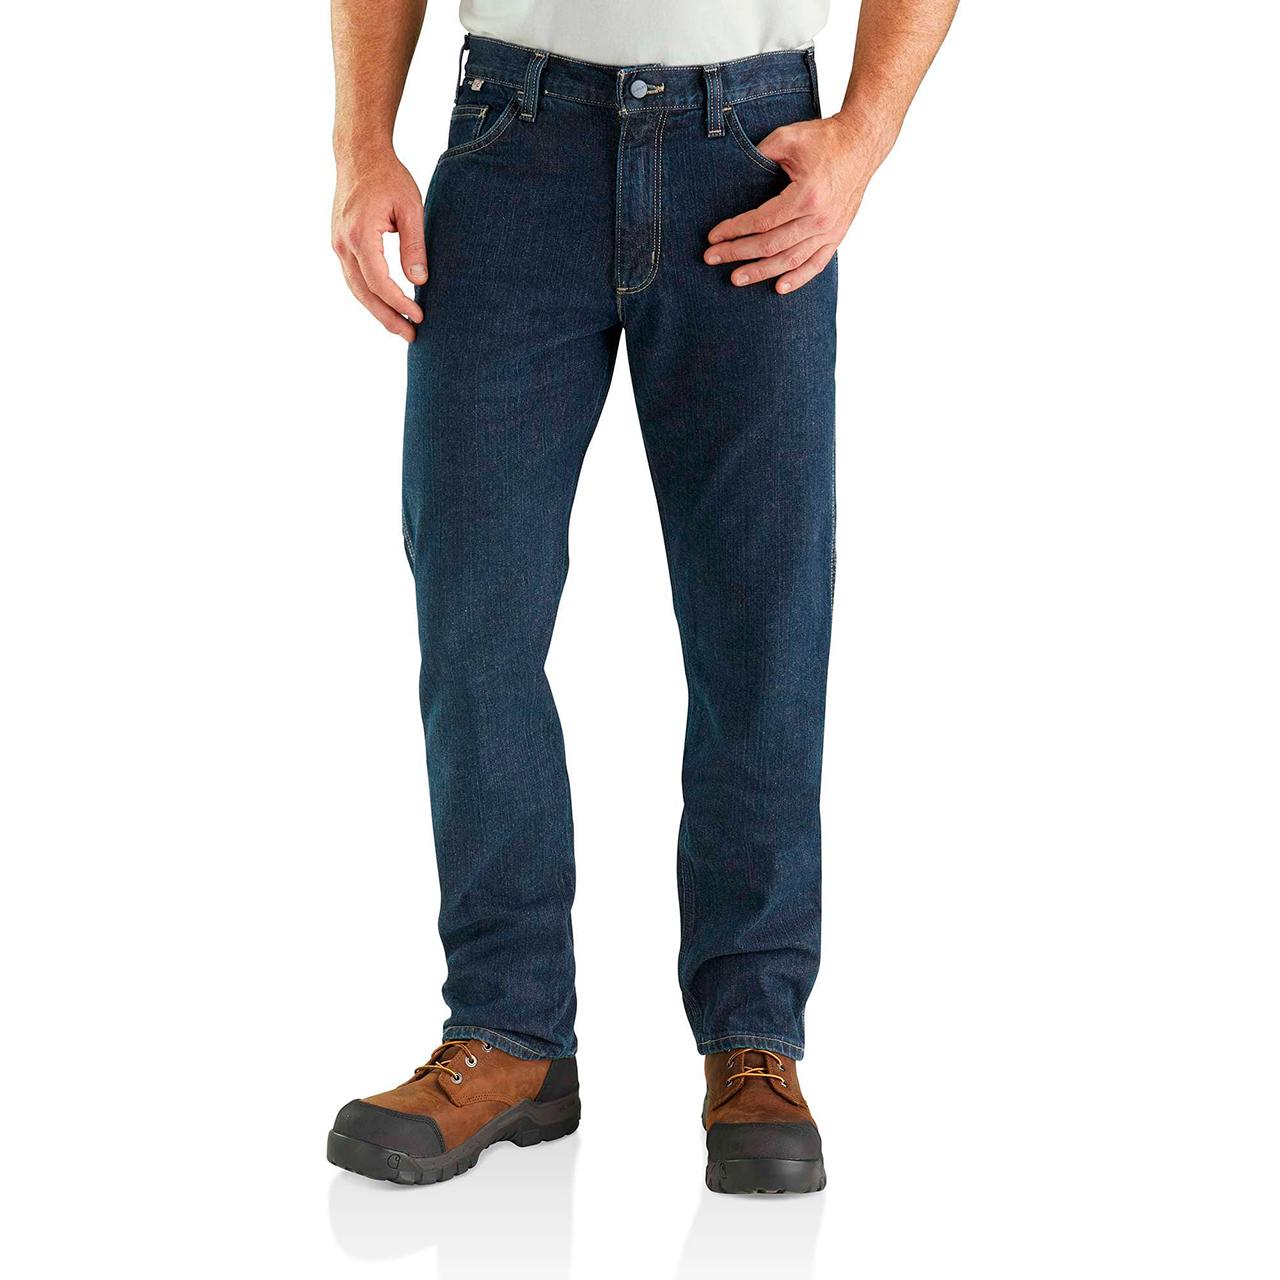 https://www.americans.ru/wp-content/uploads/2022/04/carhartt-flame-resistant-rugged-flex-jeans-deep-indigo-wash-11.jpg